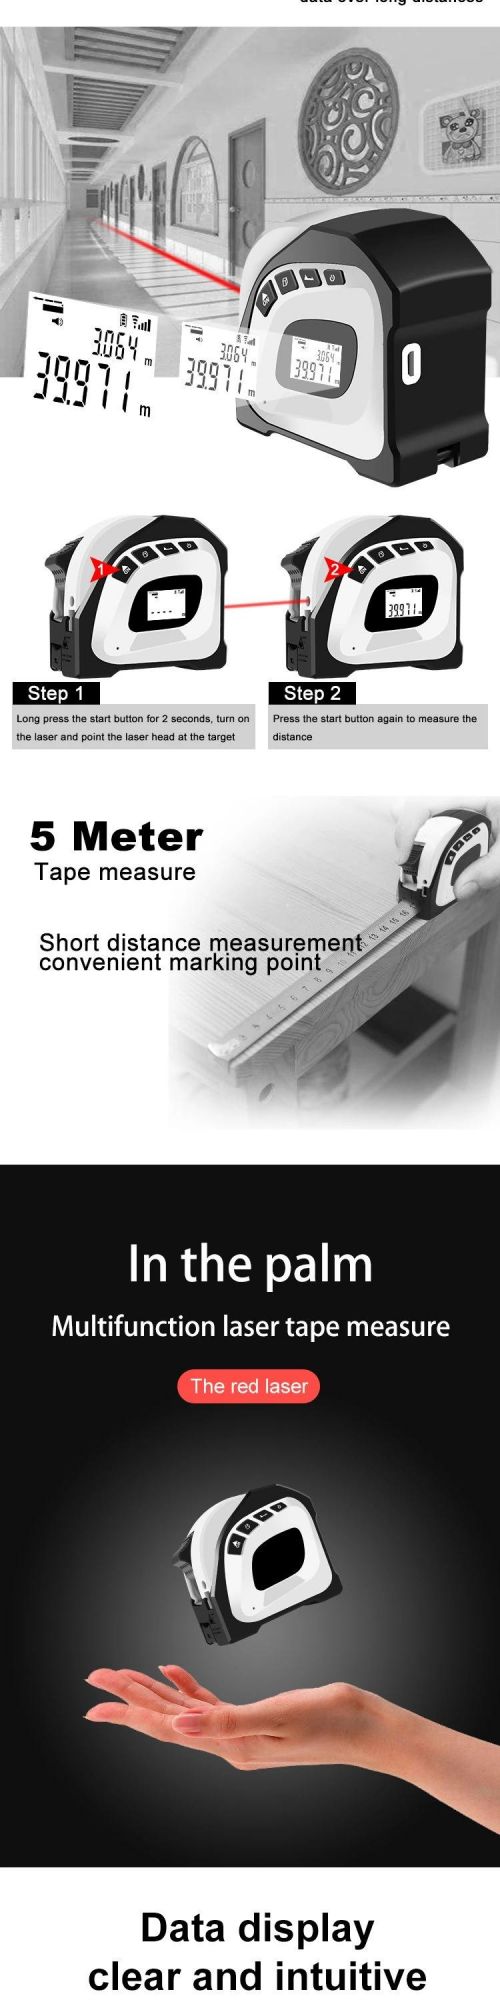 Laser Tape Measure Infrared Tape Measuring Tools Price